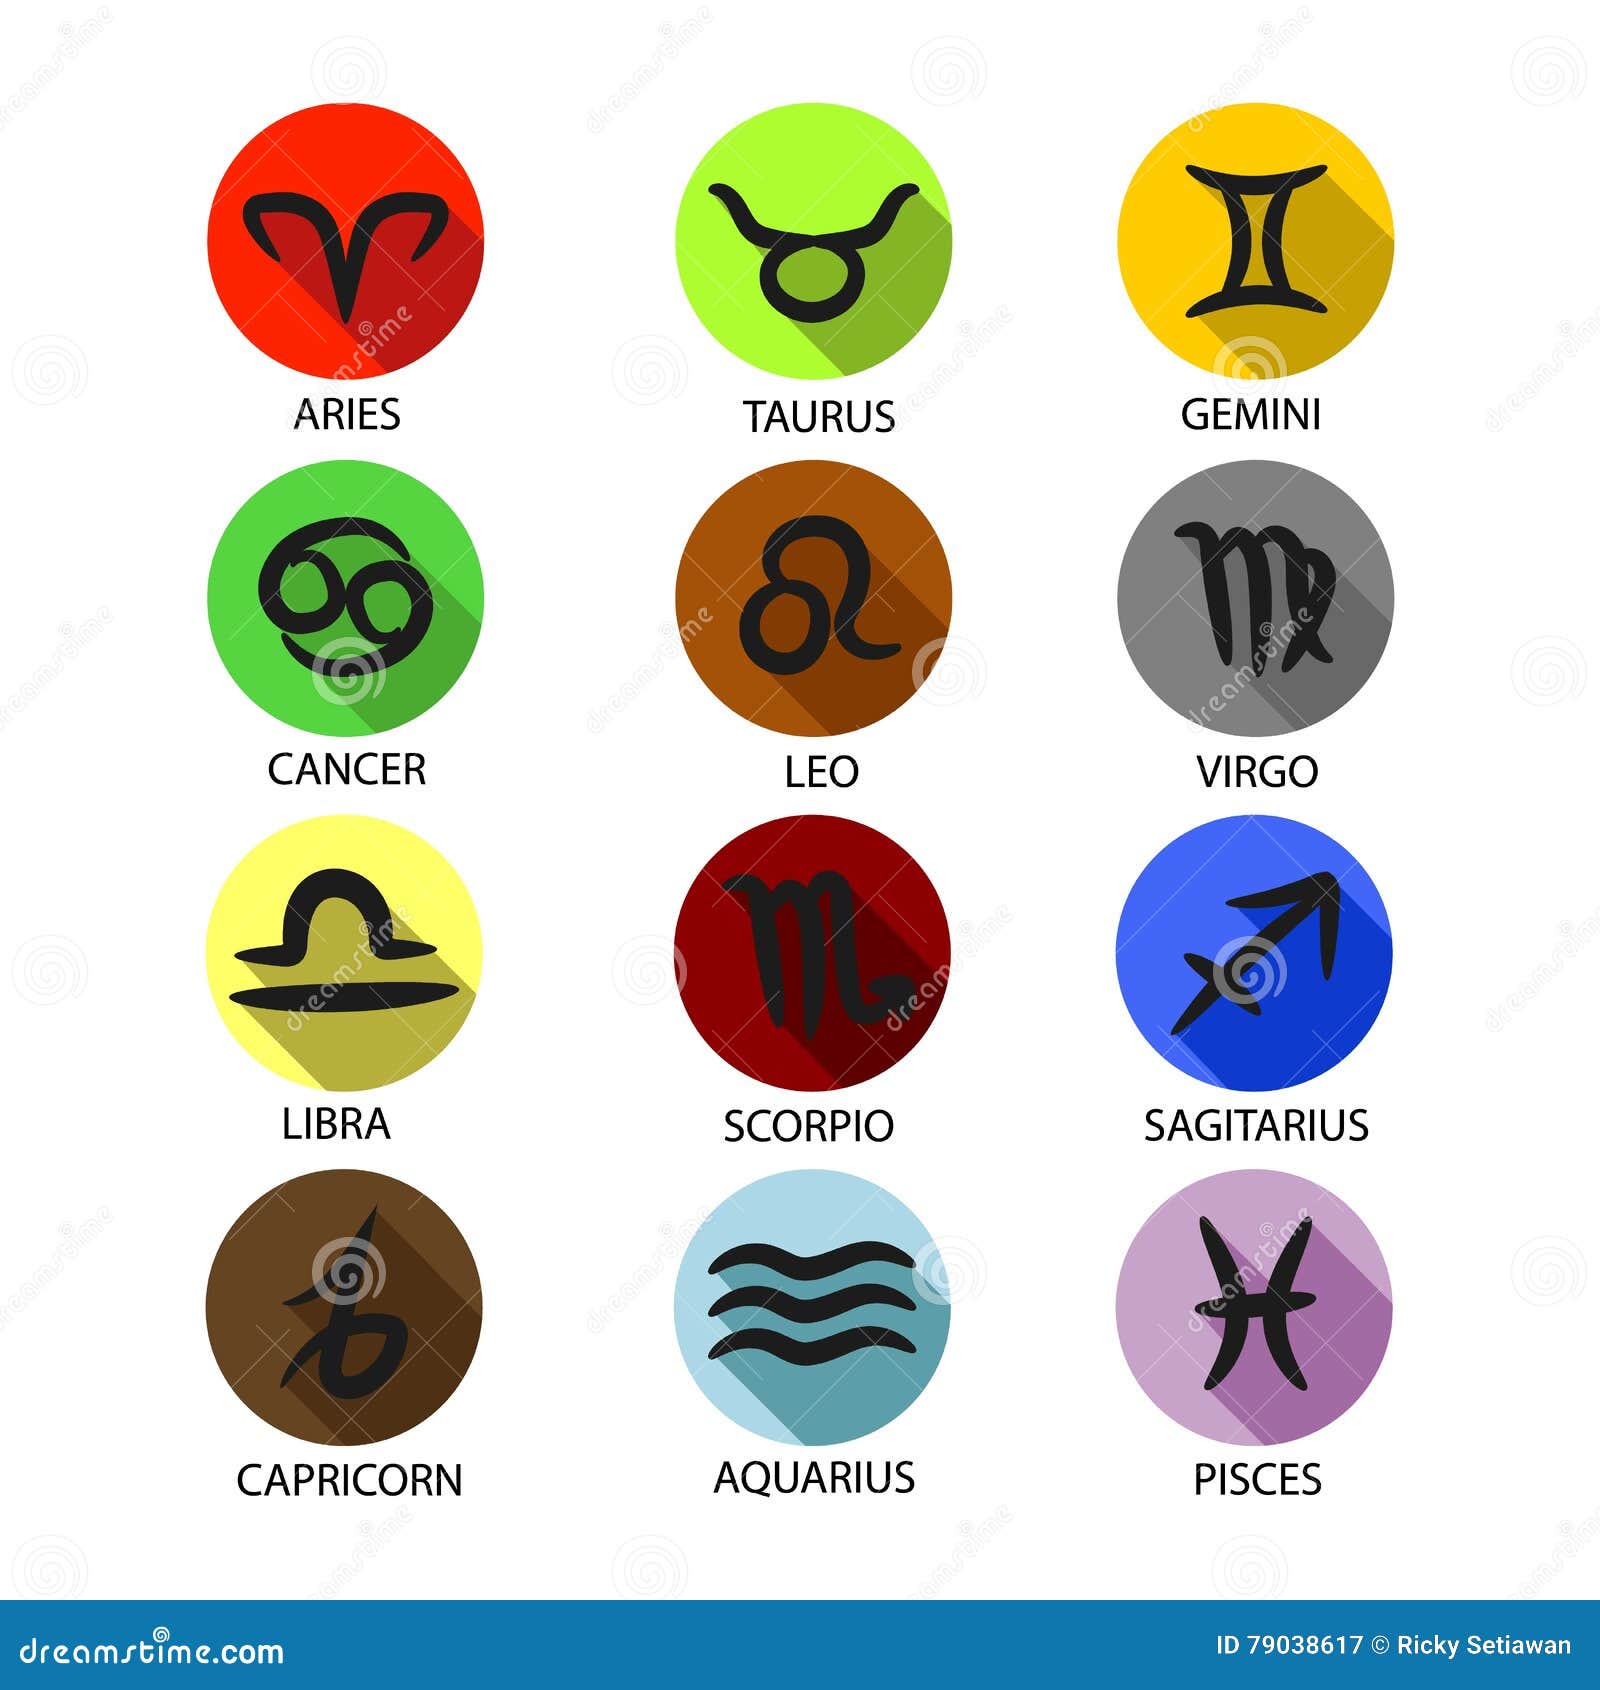 twelve-astrological-zodiac-signs-stock-illustration-illustration-of